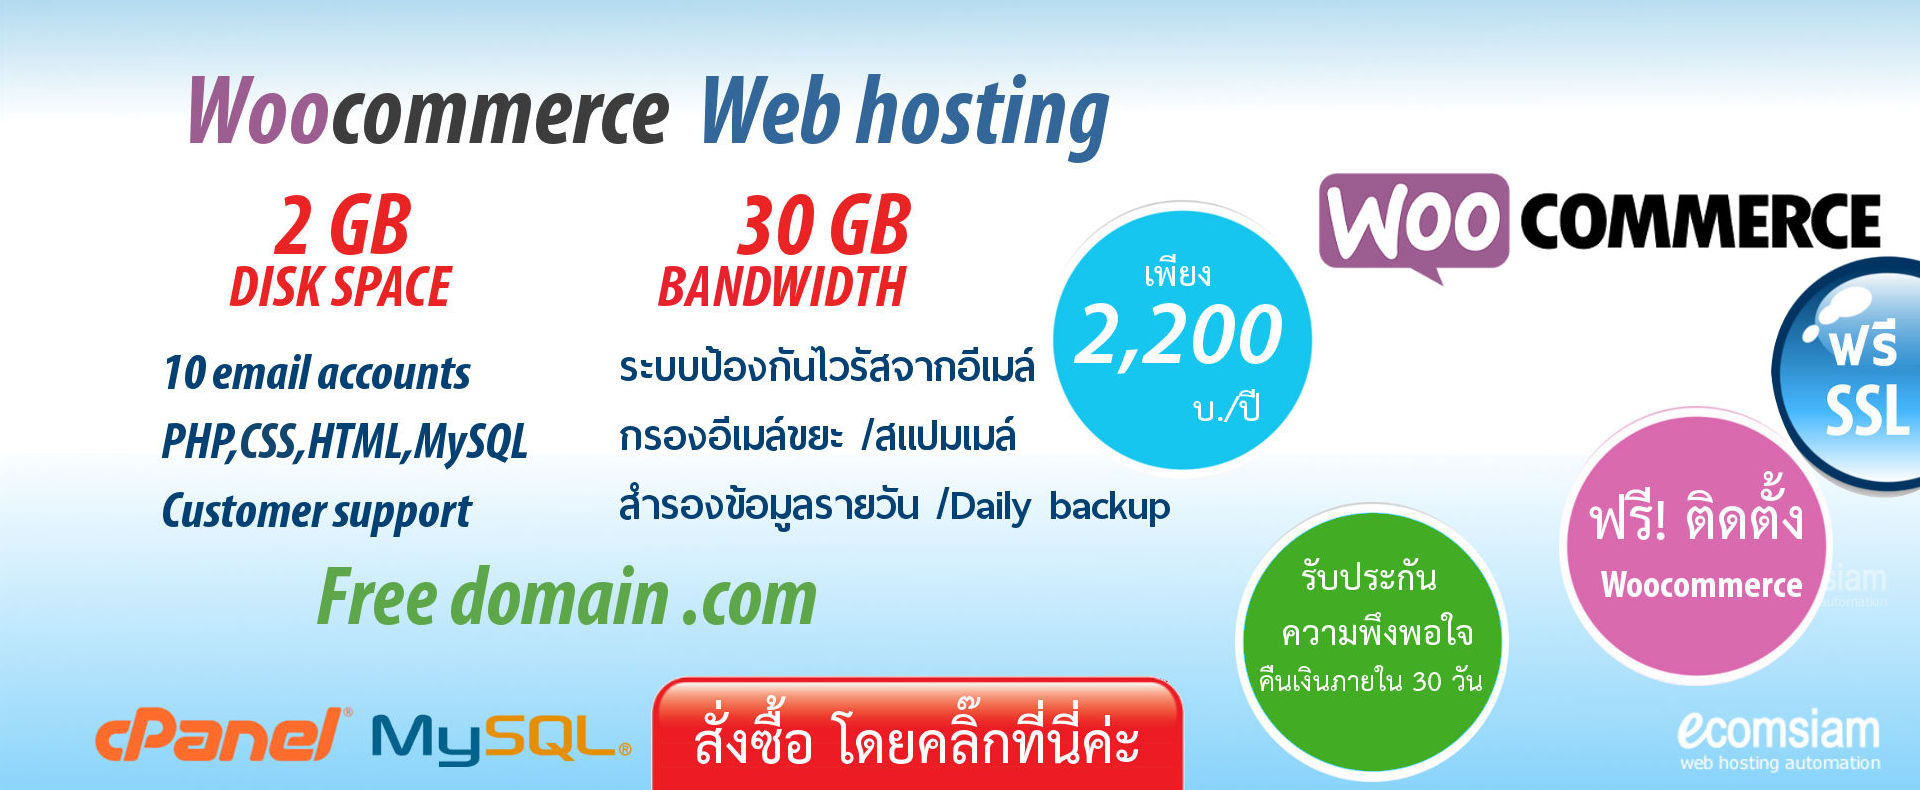 web hosting thailand -woocommerce shopping cart  ฟรีโดเมน ฟรี SSL เว็บโฮสติ้งไทย ราคาเบาๆ เริ่มต้นเพียง 2200 บาทต่อปี